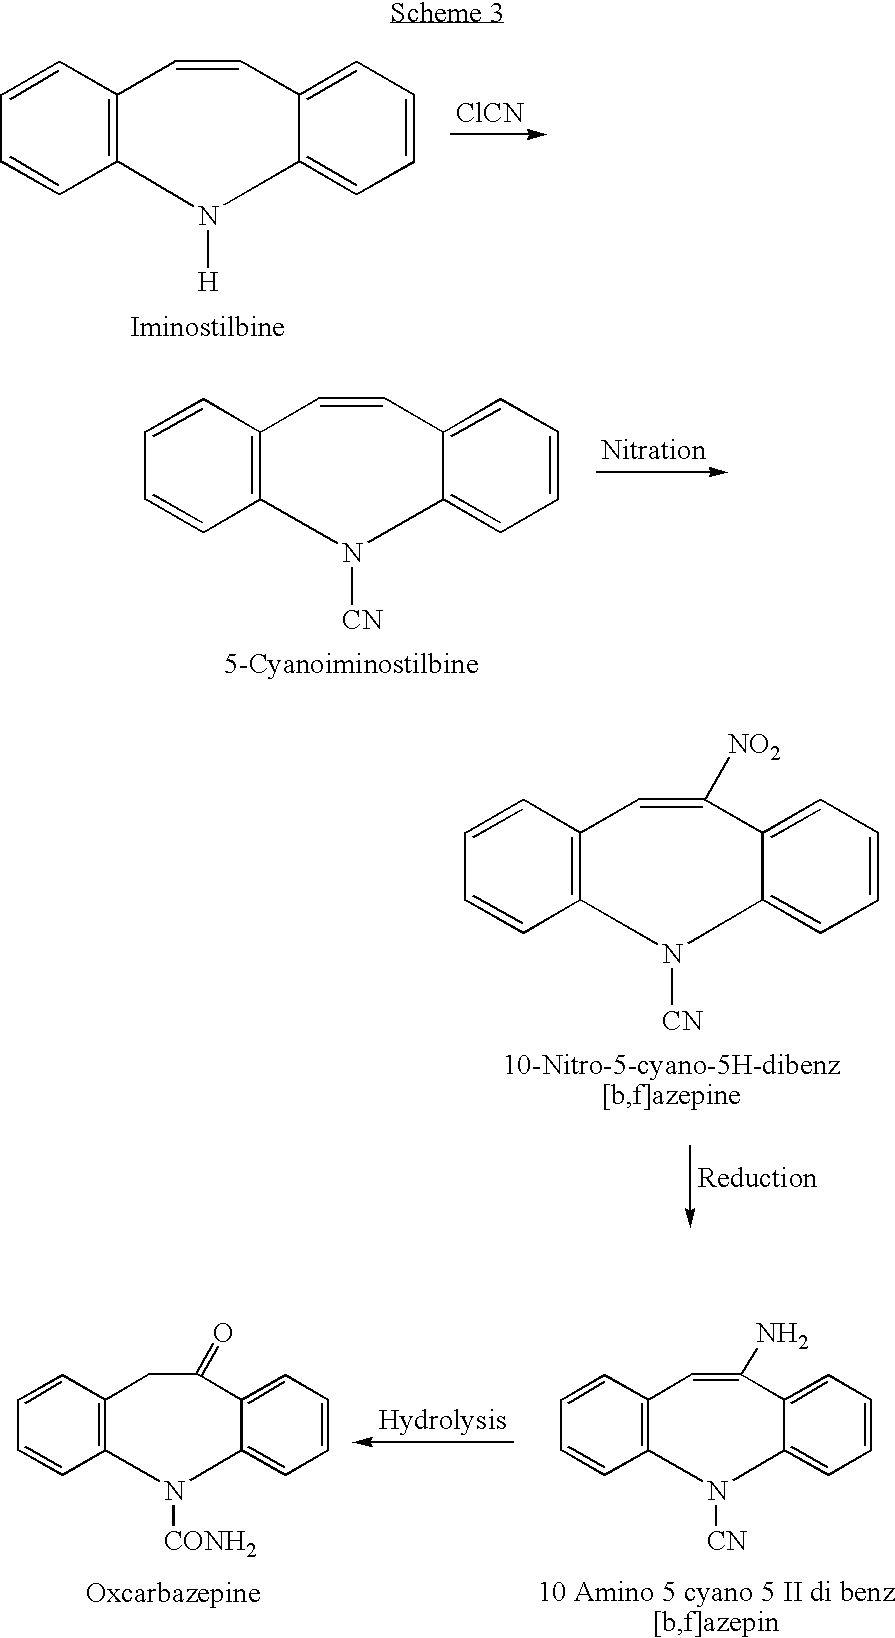 Novel process for preparation of 10-oxo-10, 11-dihydro-5h-dibenz [b,f] azepine-5-carbox- amide (oxcarbazepine) via intermediate, 10-methoxy-5h-debenz[b,f] azepine-5-carbonyl- chloride